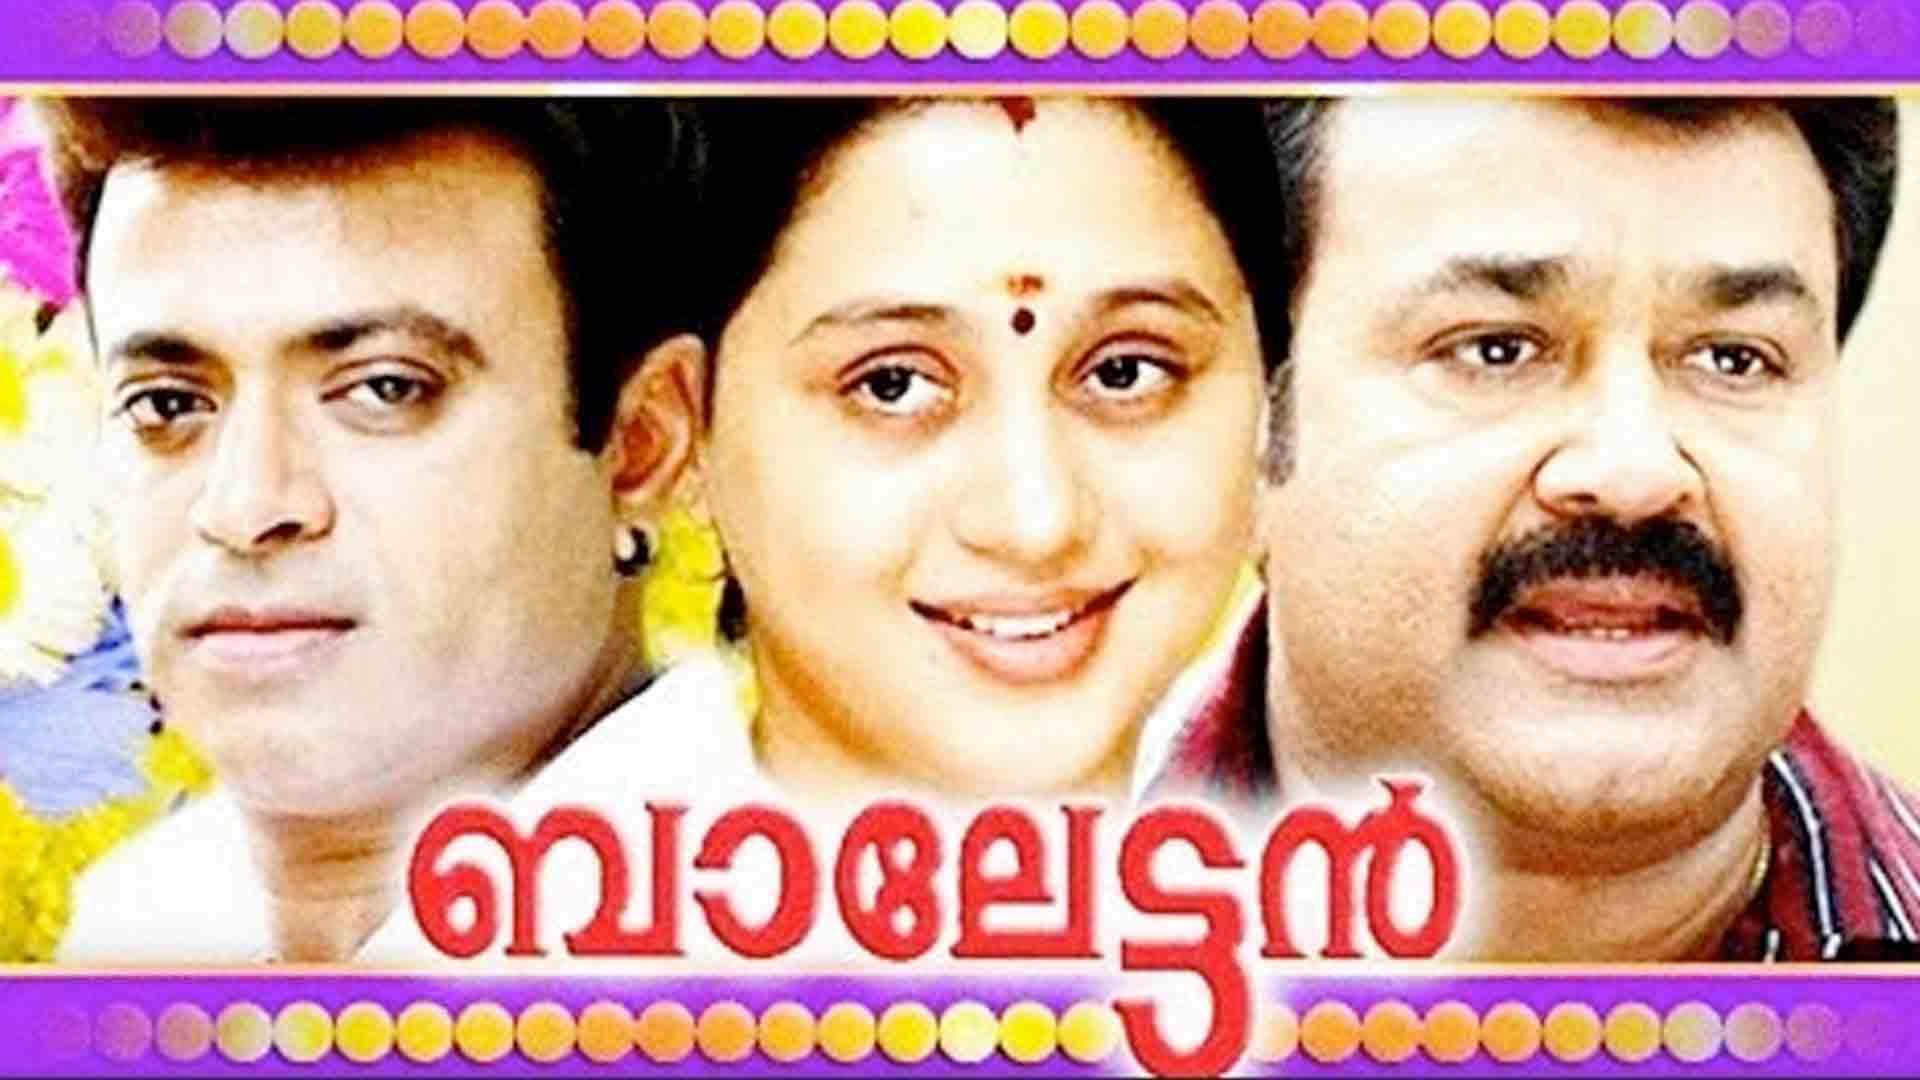 Online My Hero Mythri Malayalam Movies My Hero Mythri Malayalam Movies Live